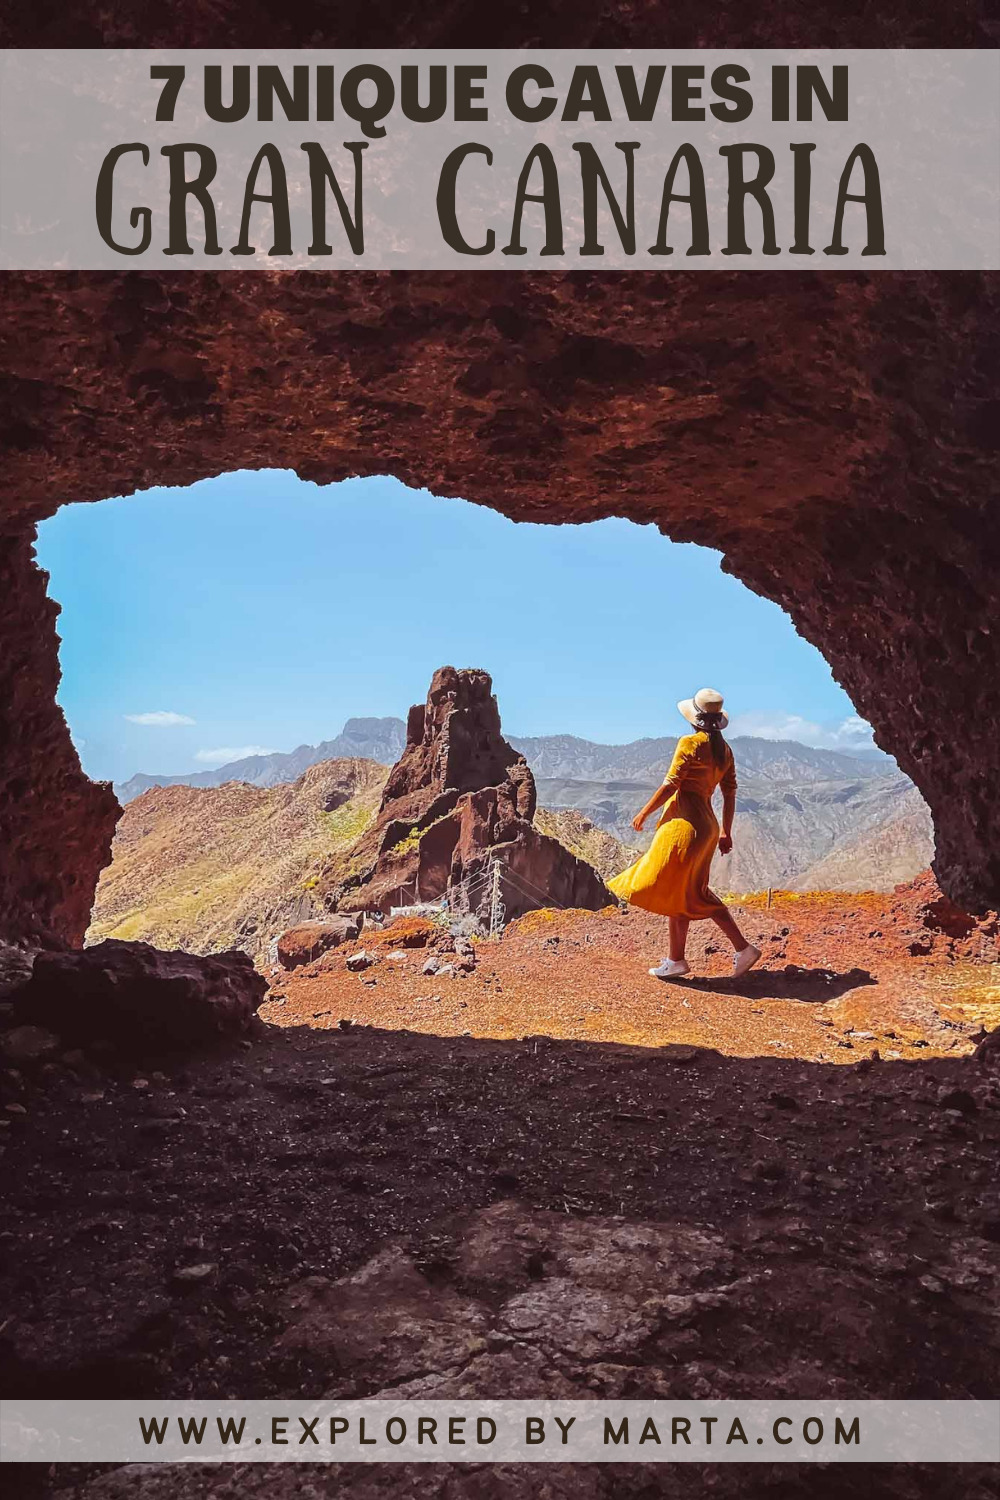 Unique caves in Gran Canaria